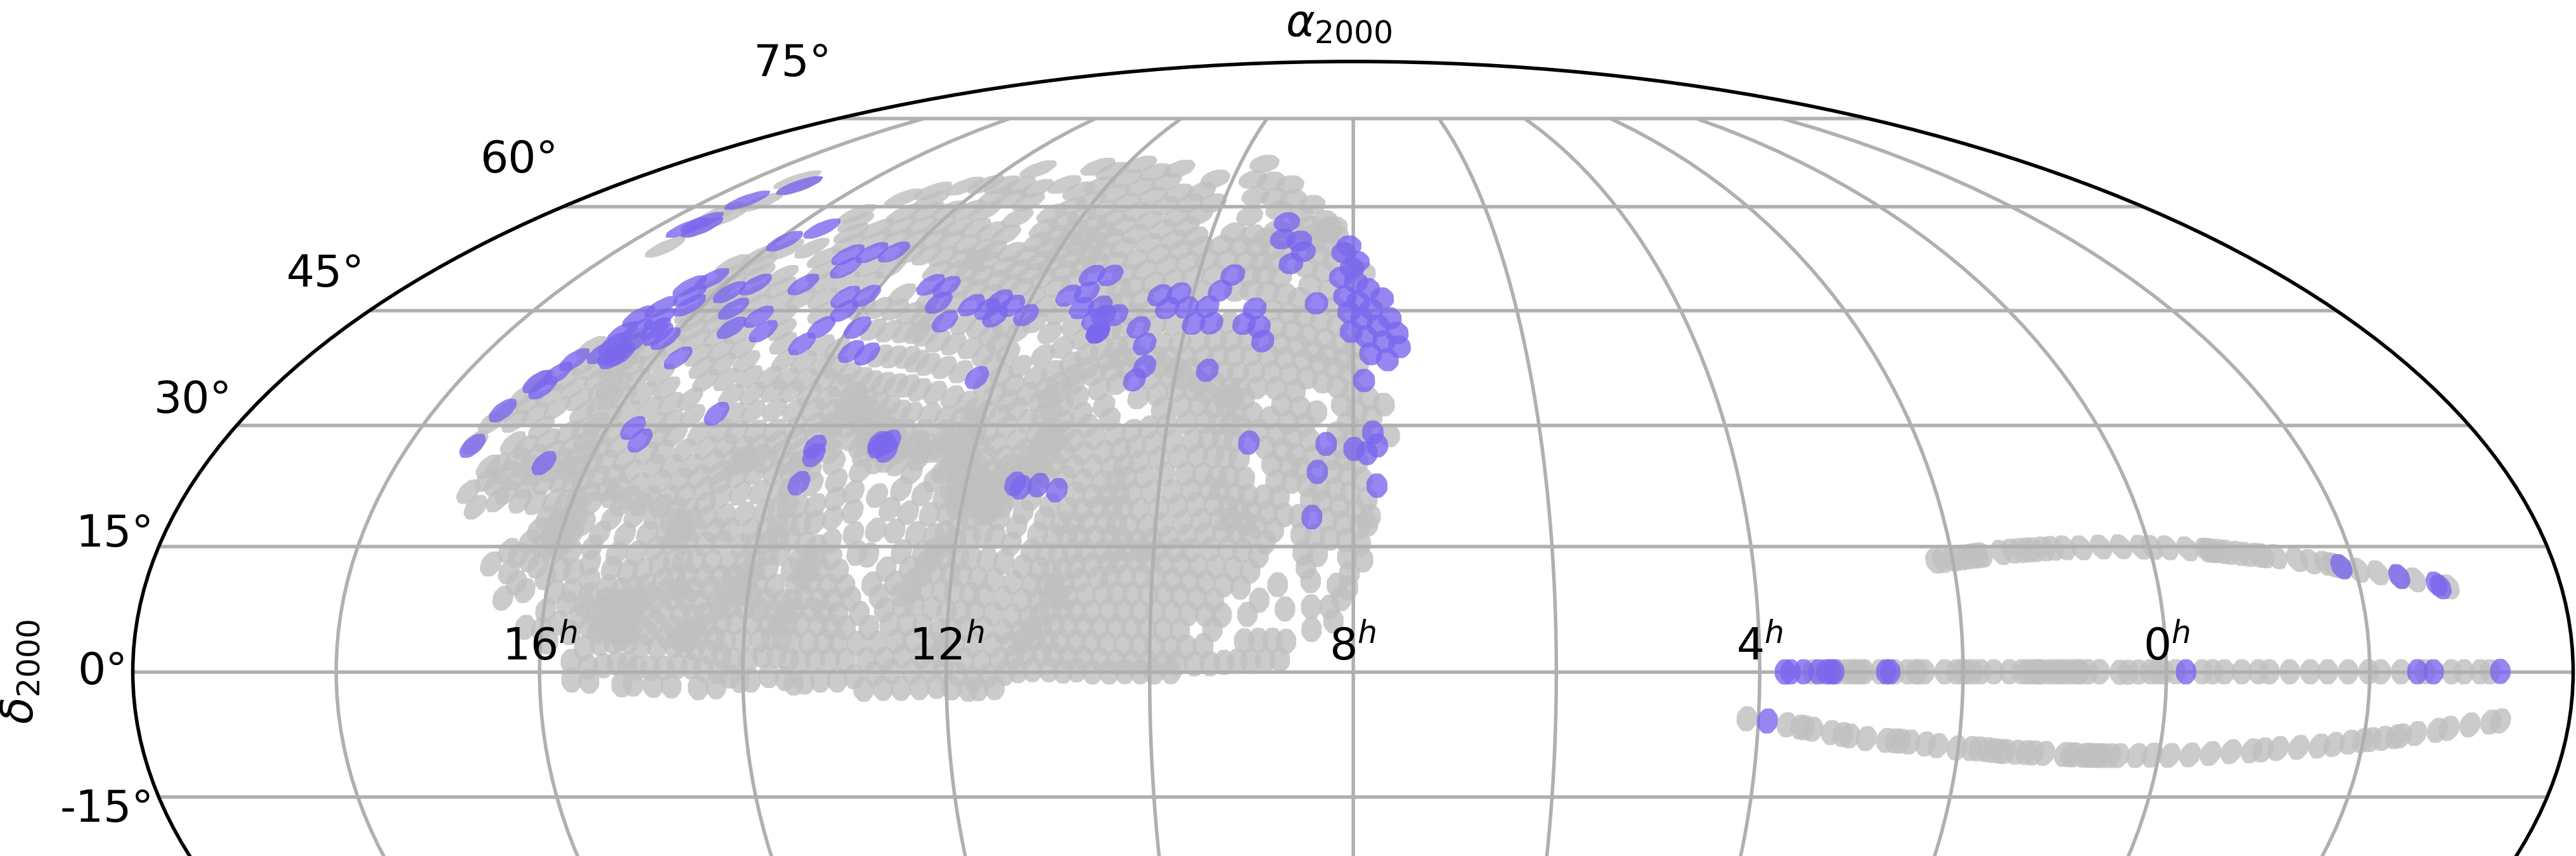 DR14 MaNGA spectroscopic coverage in Equatorial coordinates.